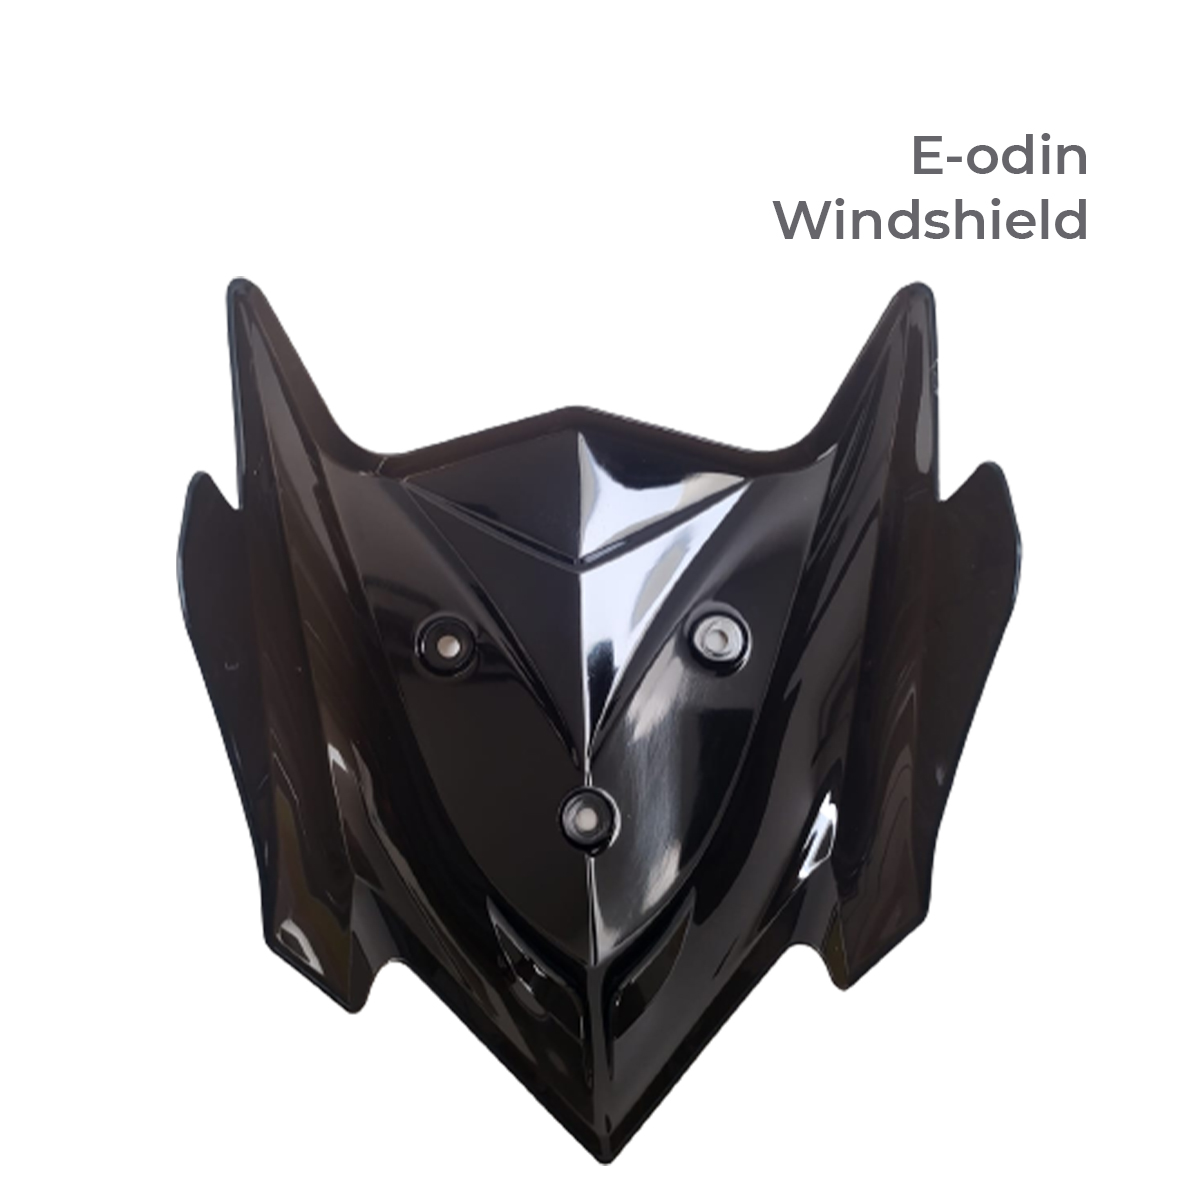 DAYI Windschutzscheibe für Dayi E Odin 2.0 E Odin 2.0 Pro E Odin 3.0 Pro E Scooter E Roller E Motorrad Ersatzteile